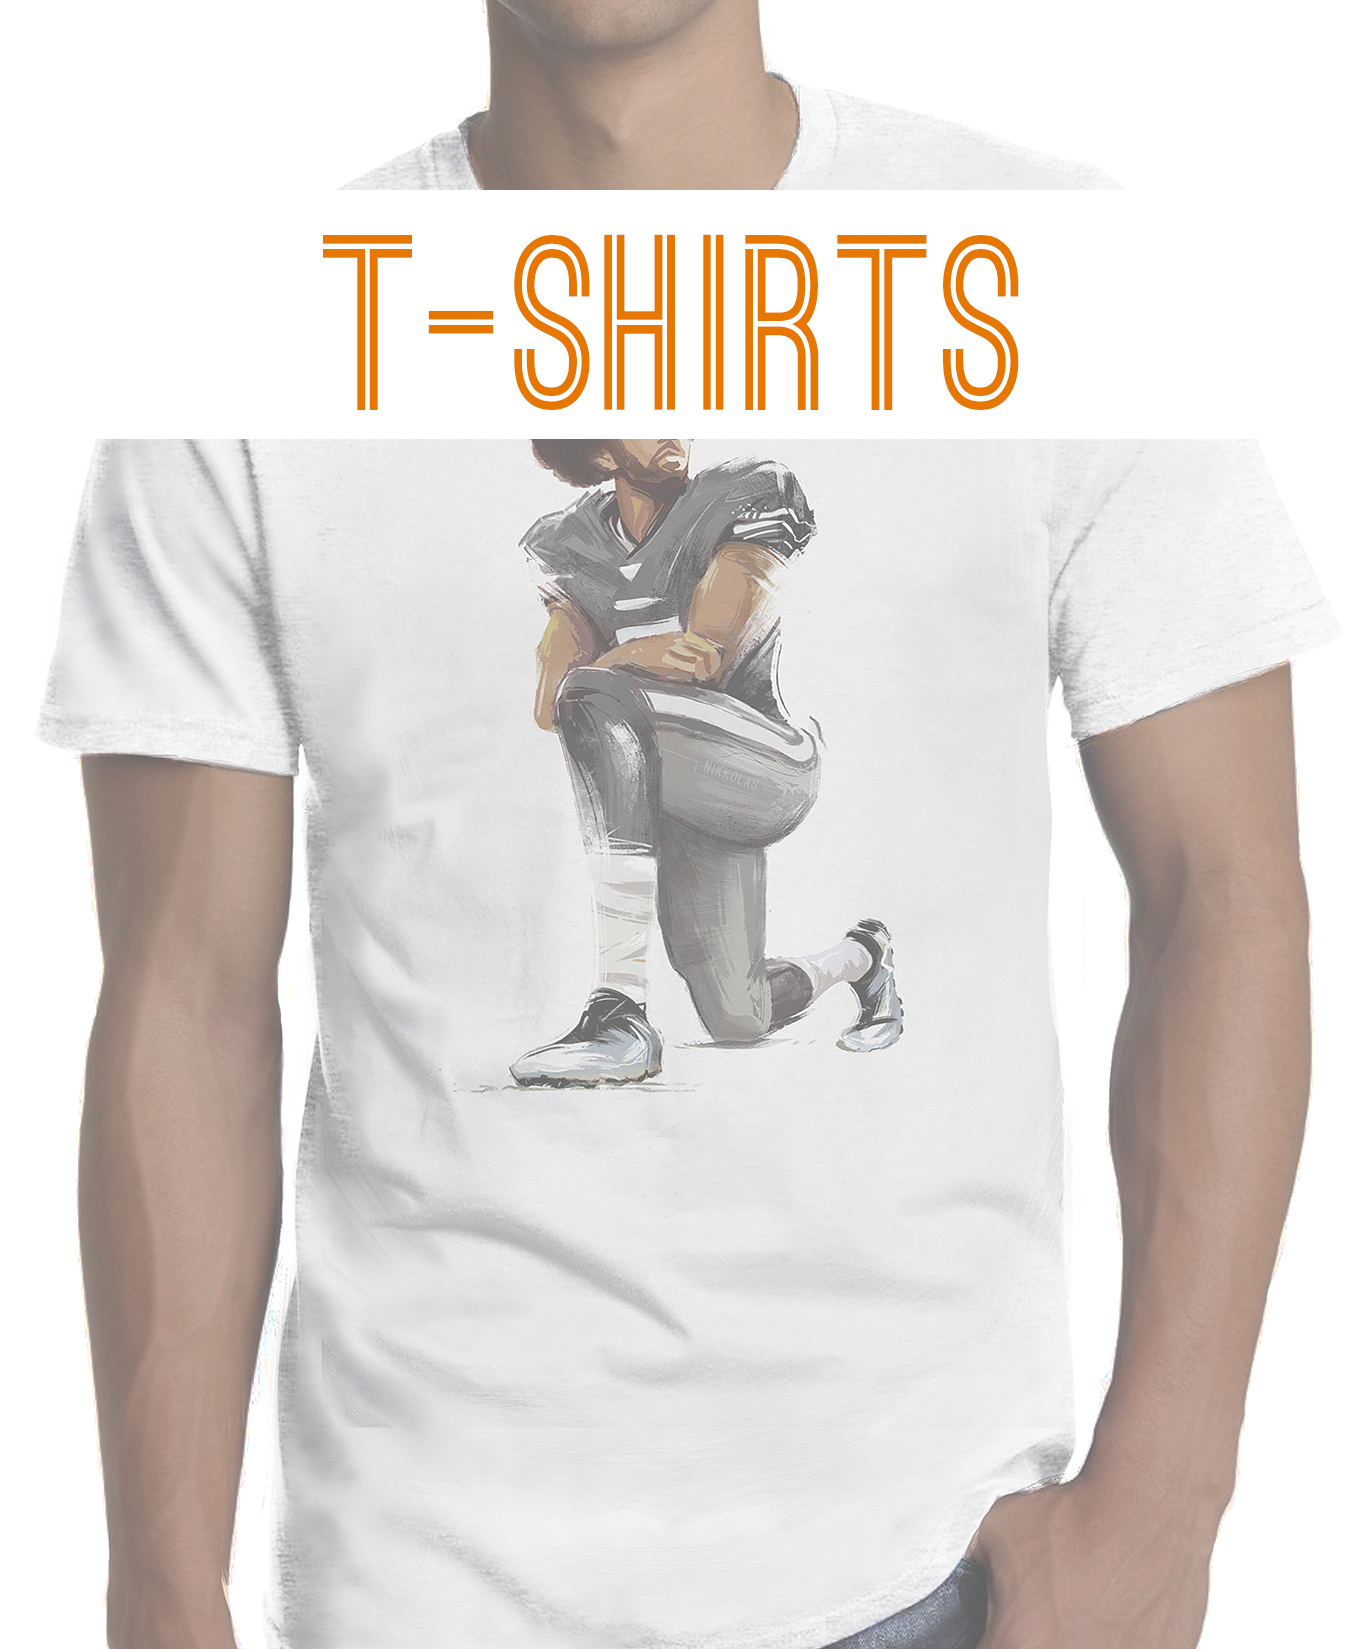 Tshirts website.jpg